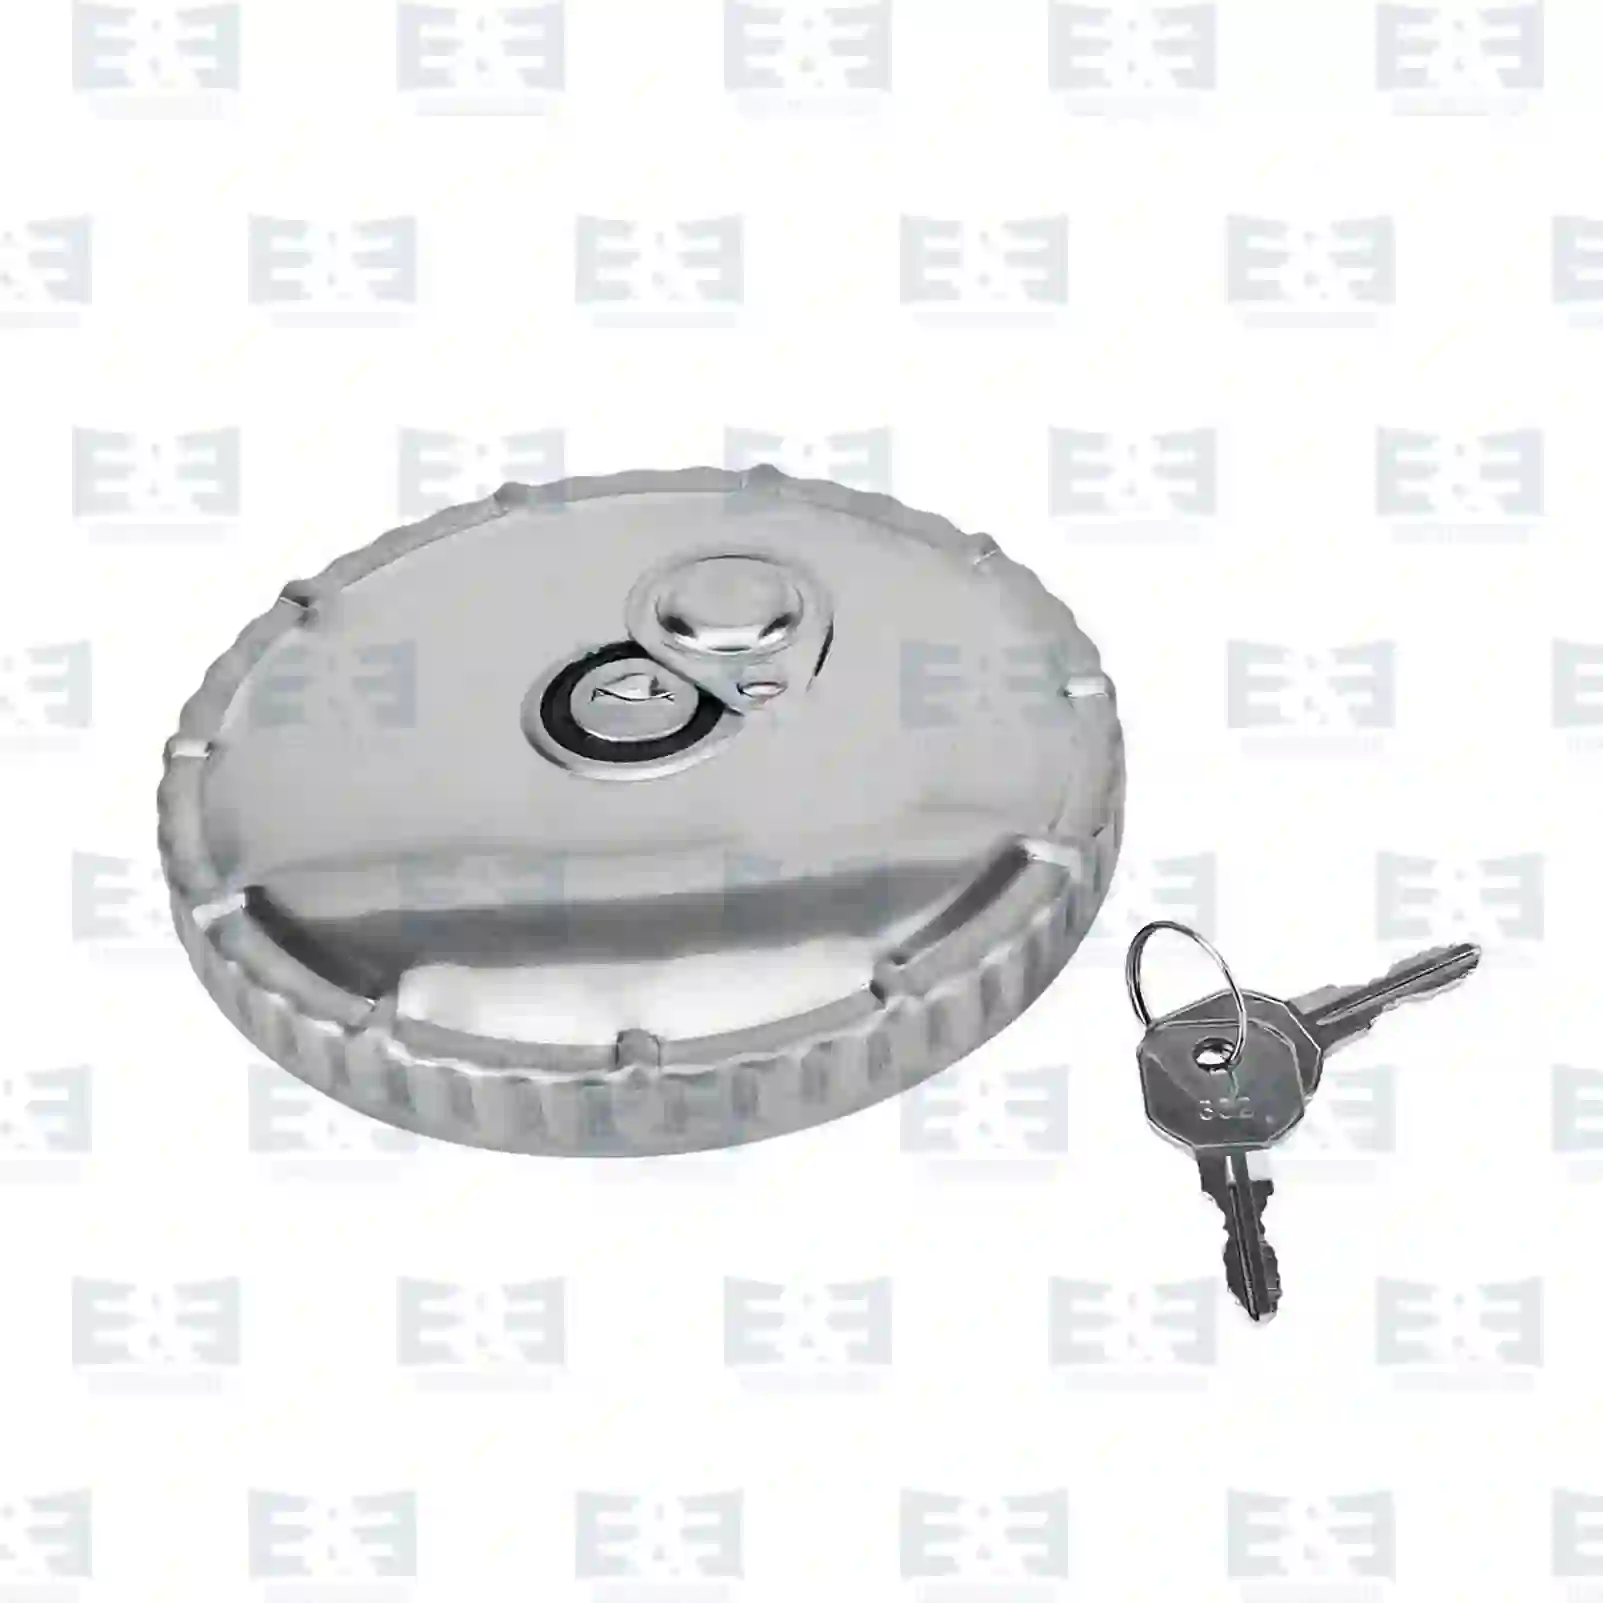  Filler cap, ventilated, lockable || E&E Truck Spare Parts | Truck Spare Parts, Auotomotive Spare Parts